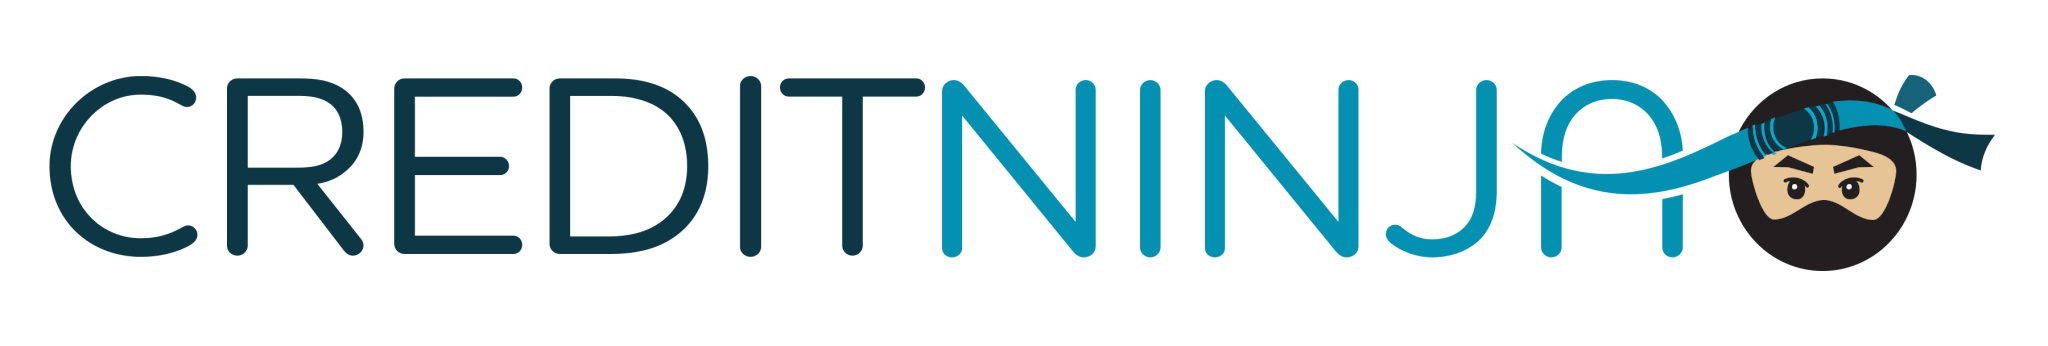 Credit Ninja logo